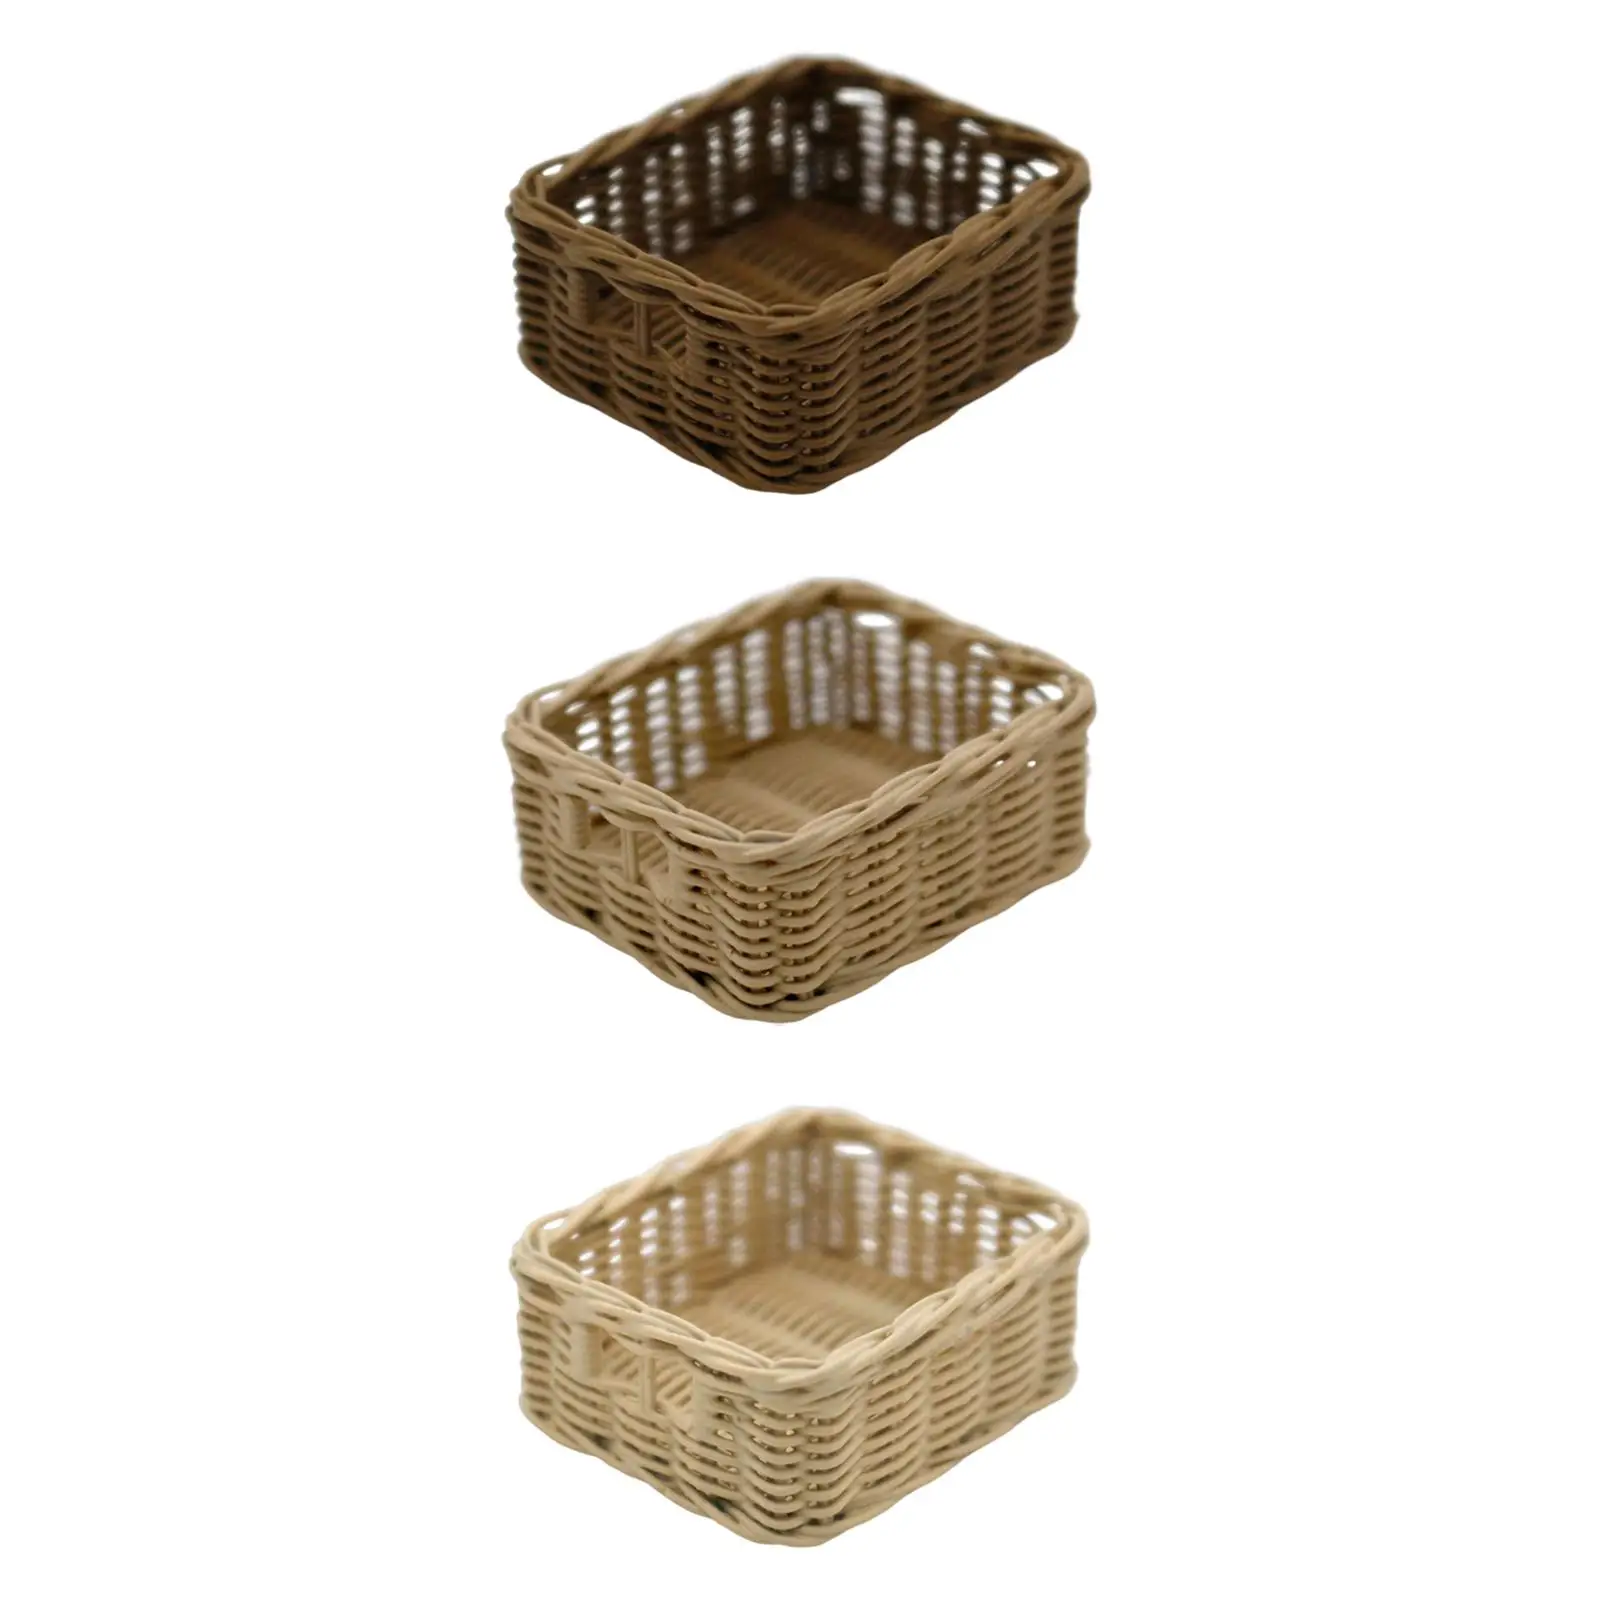 Simulation 1: 6 Dollhouse Basket Dollhouse Accessories for Dollhouse Garden